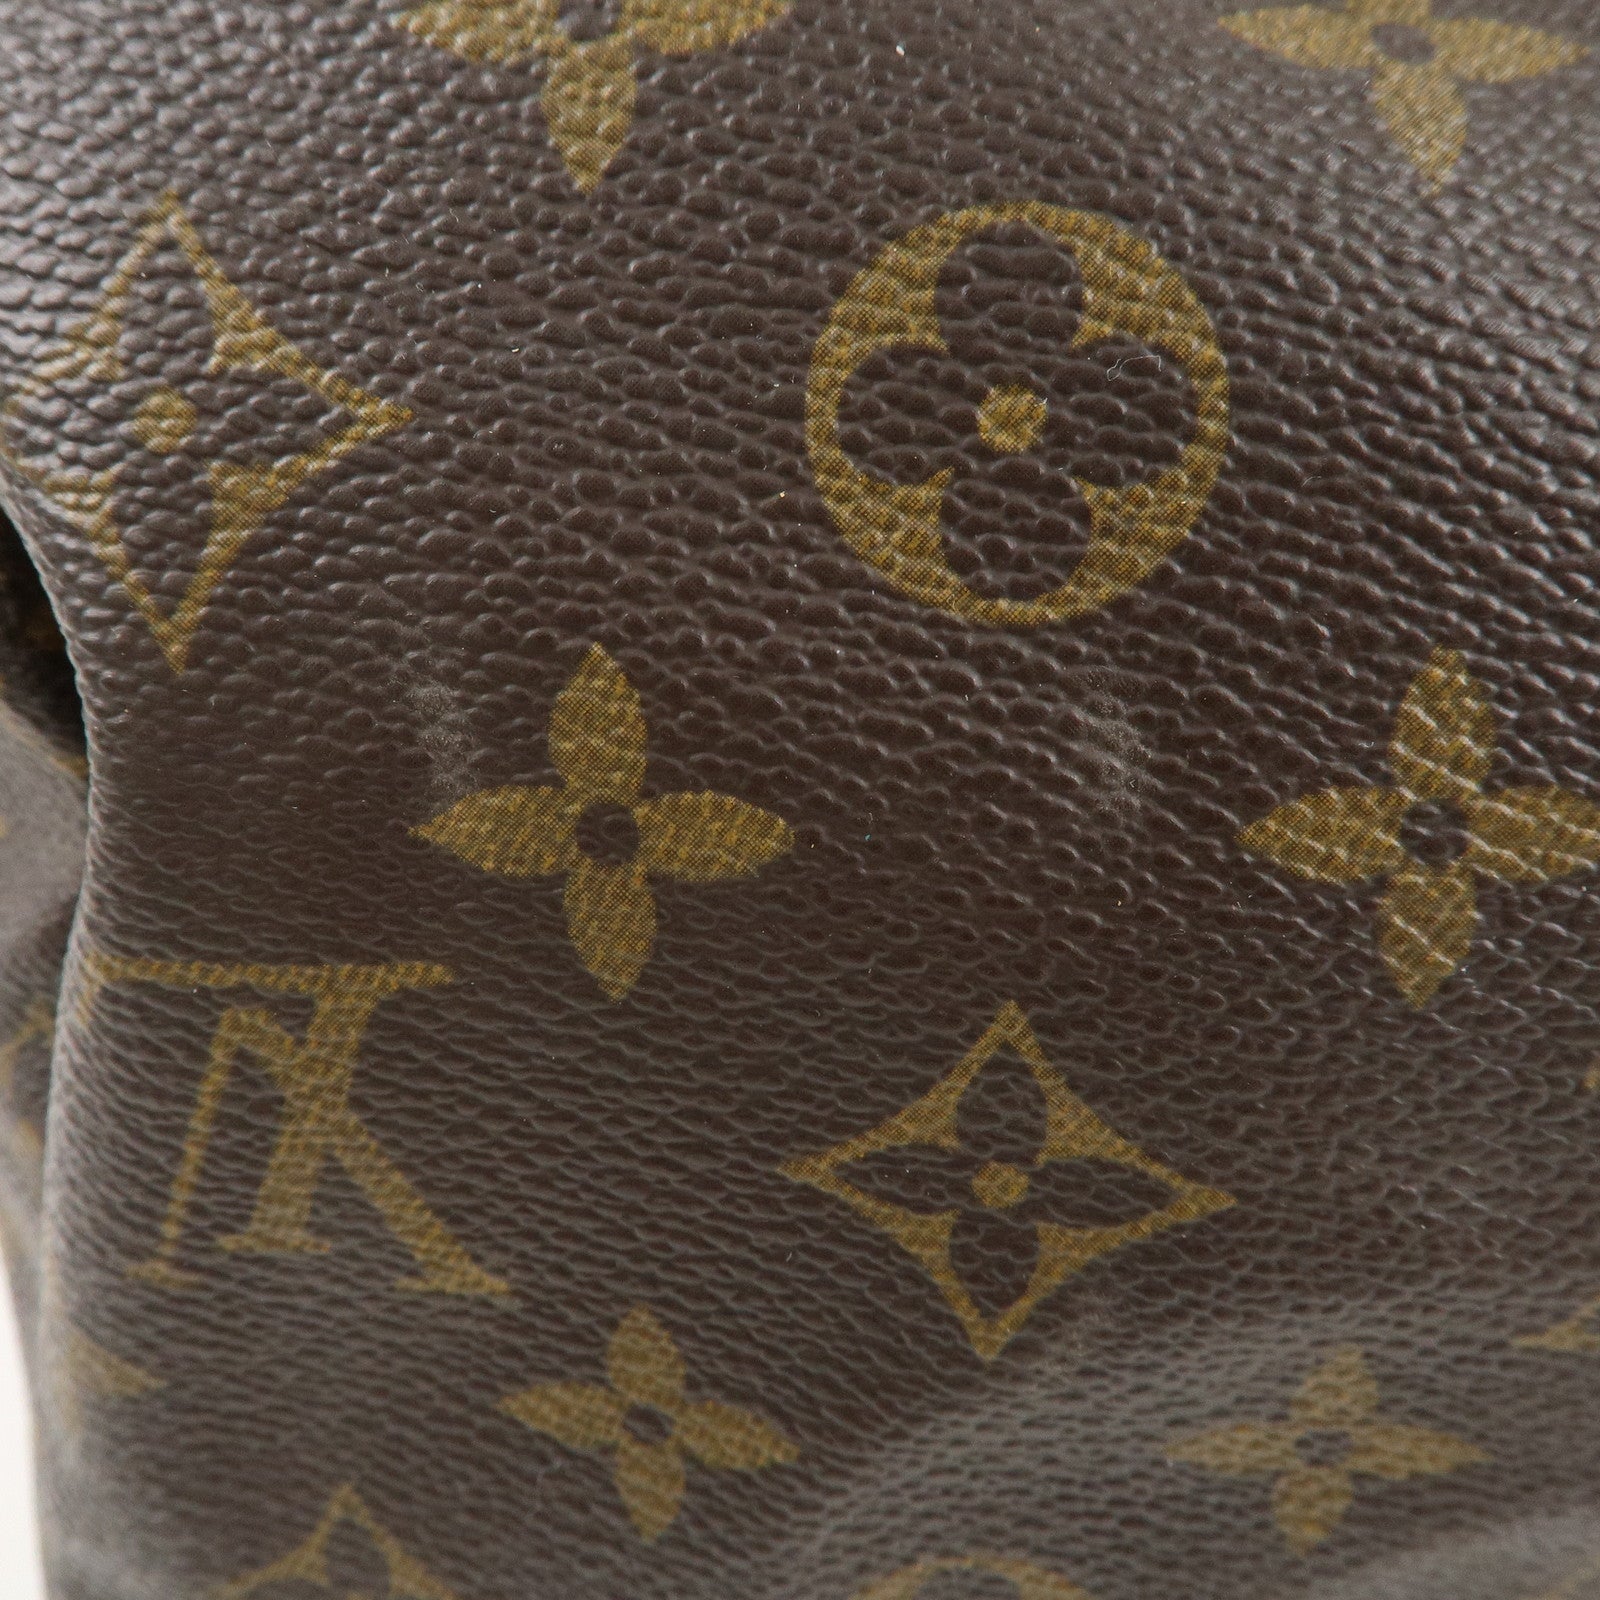 Louis Vuitton Monogram Speedy 30 Hand Bag M41526 - YH00667